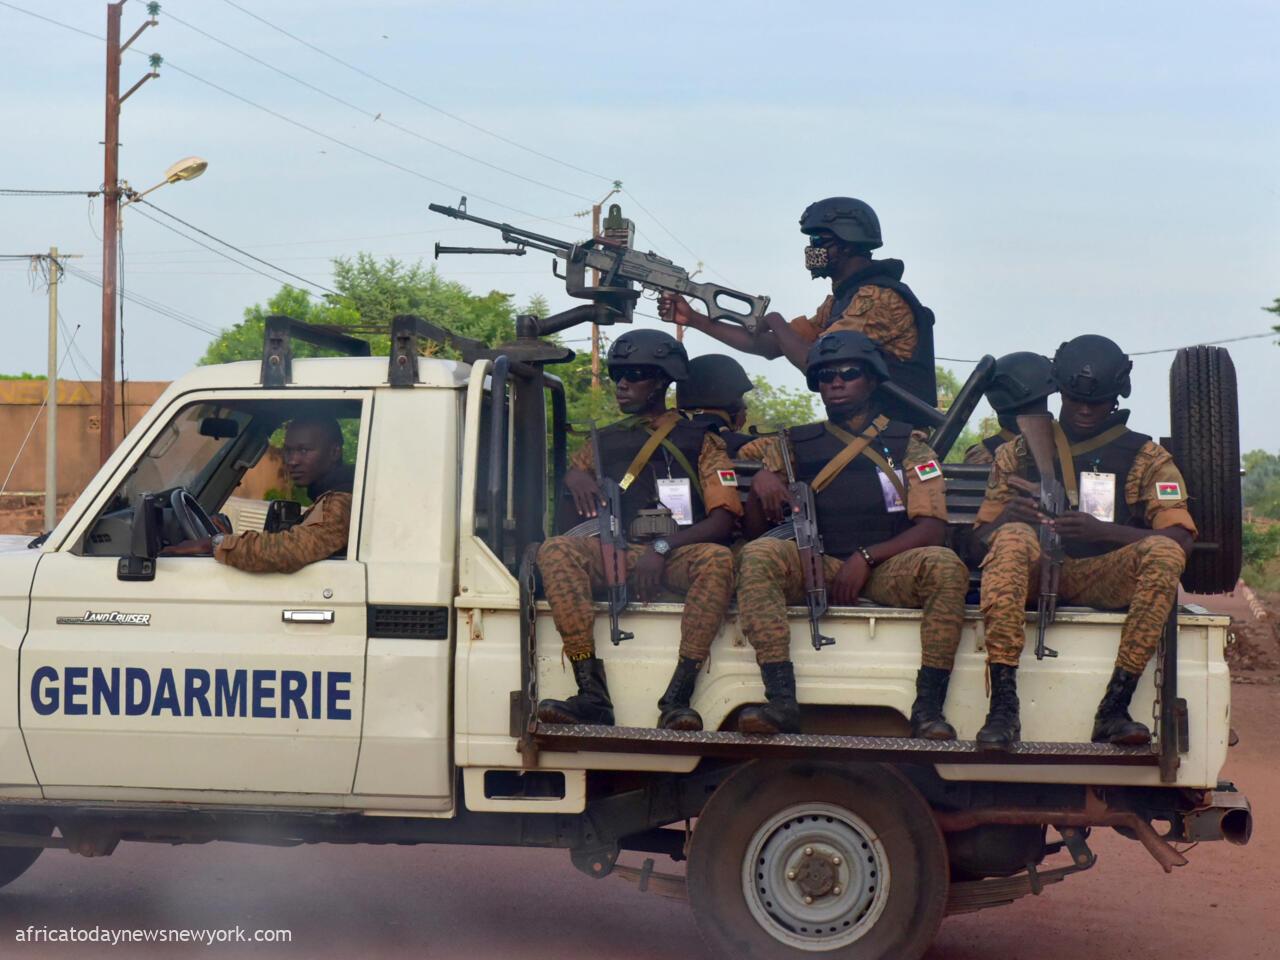 Over 15 Killed In Attack On Catholic Church In Burkina Faso